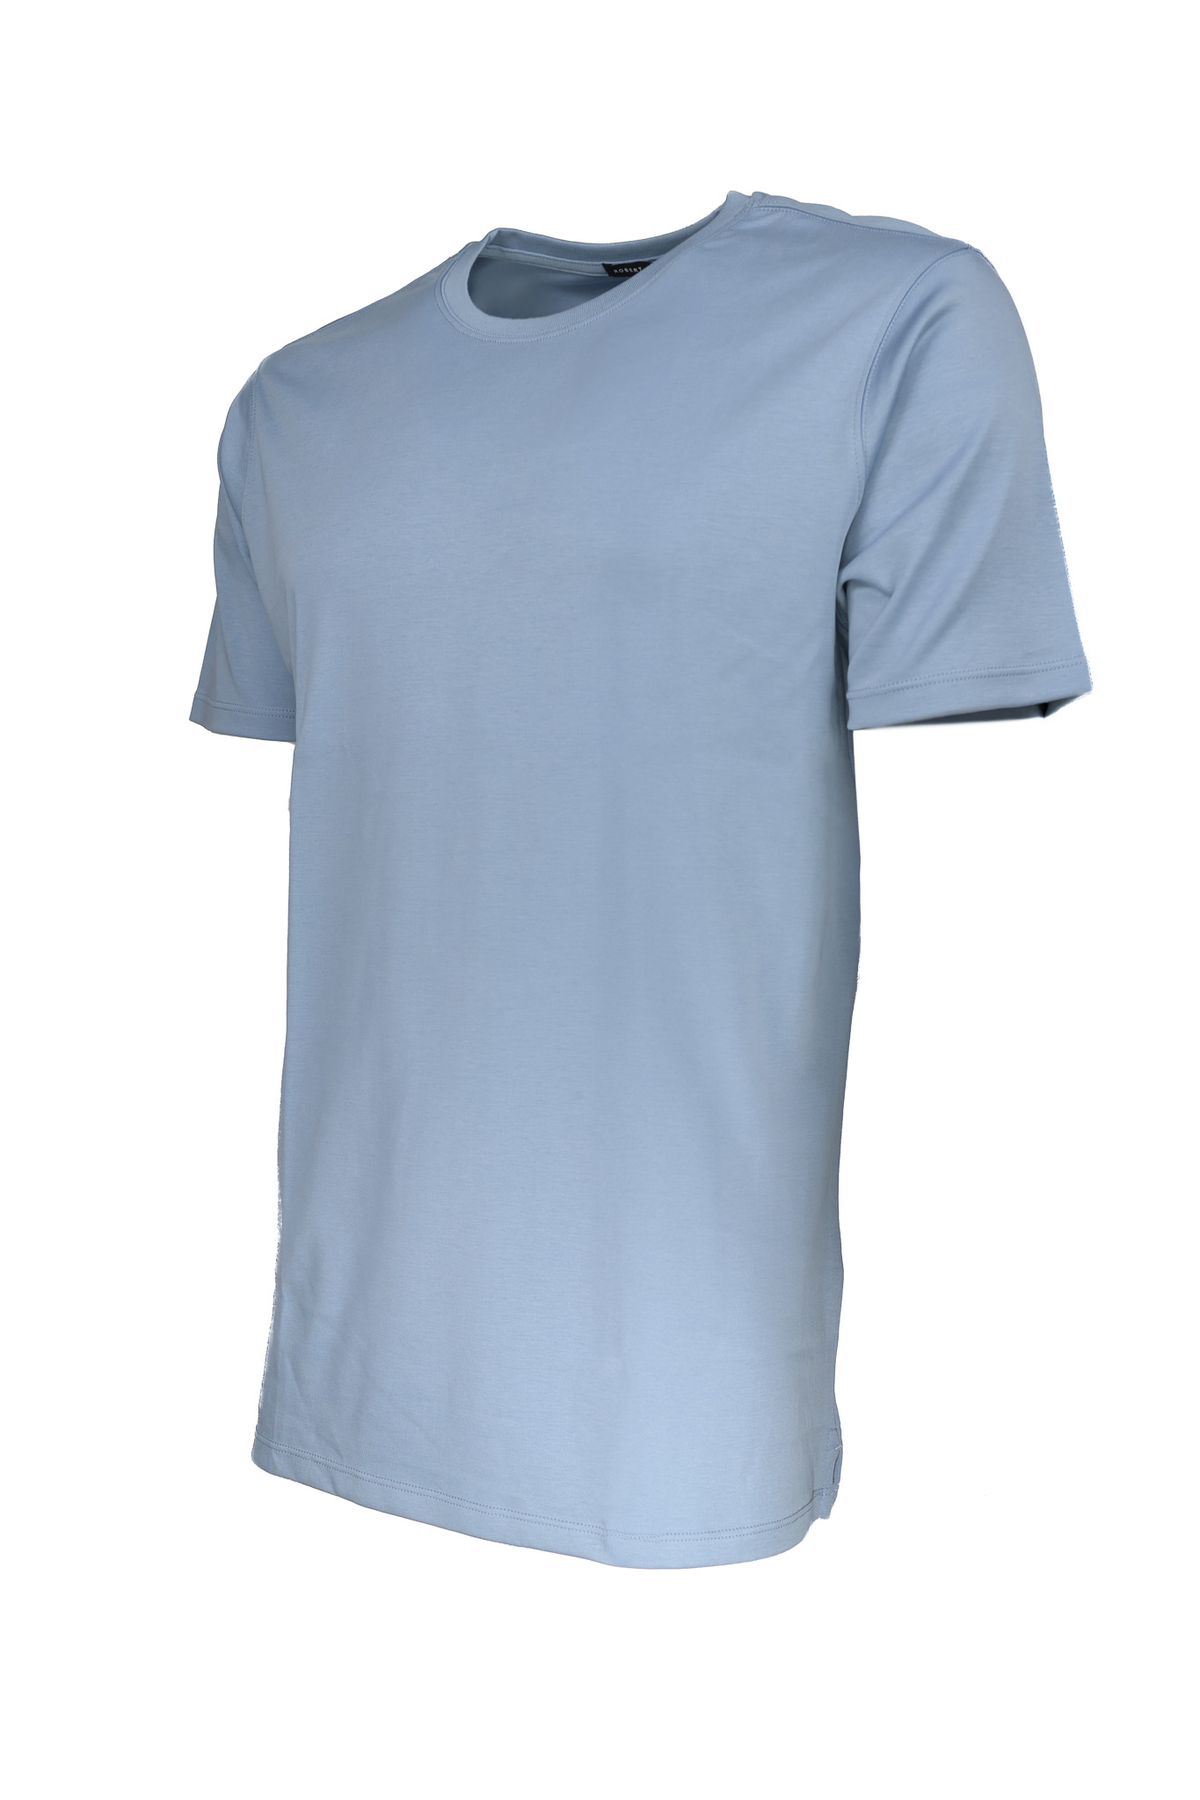 Robert Barakett T-Shirt Dover Blue